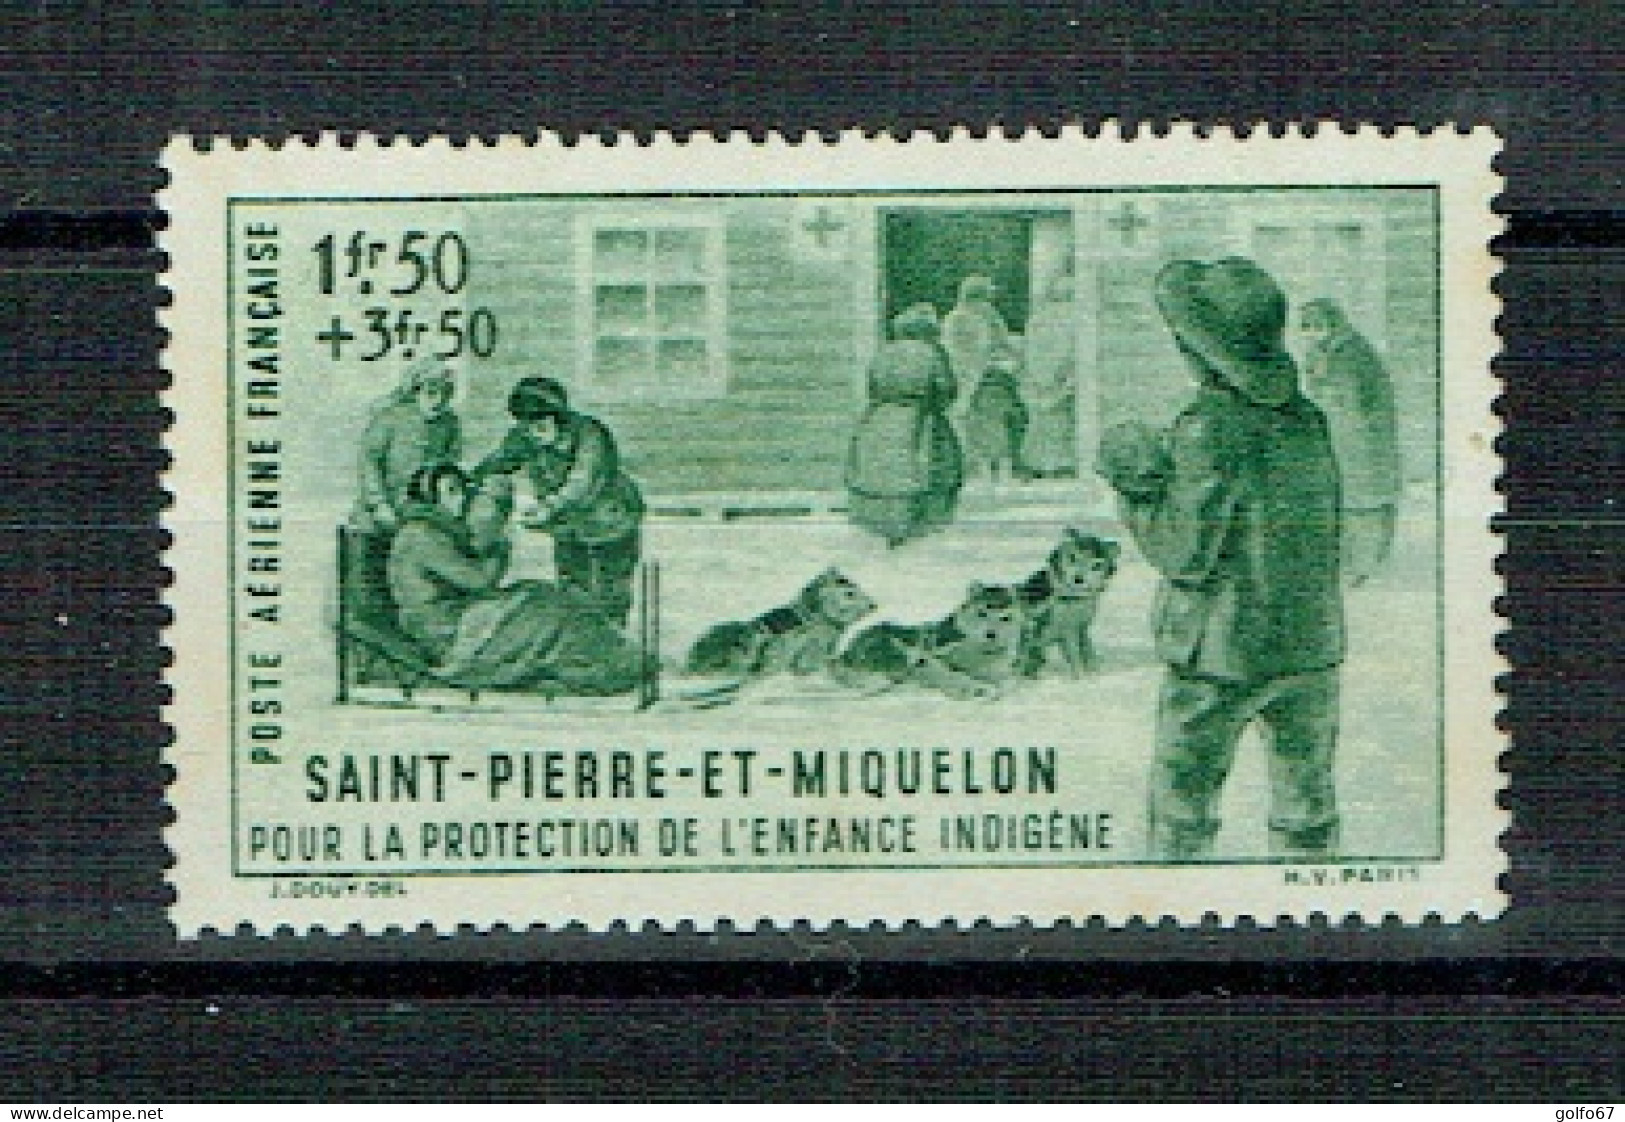 ST PIERRE & MIQUELON Poste Aérienne 1942 Y&T N° 1 NEUF** - Neufs